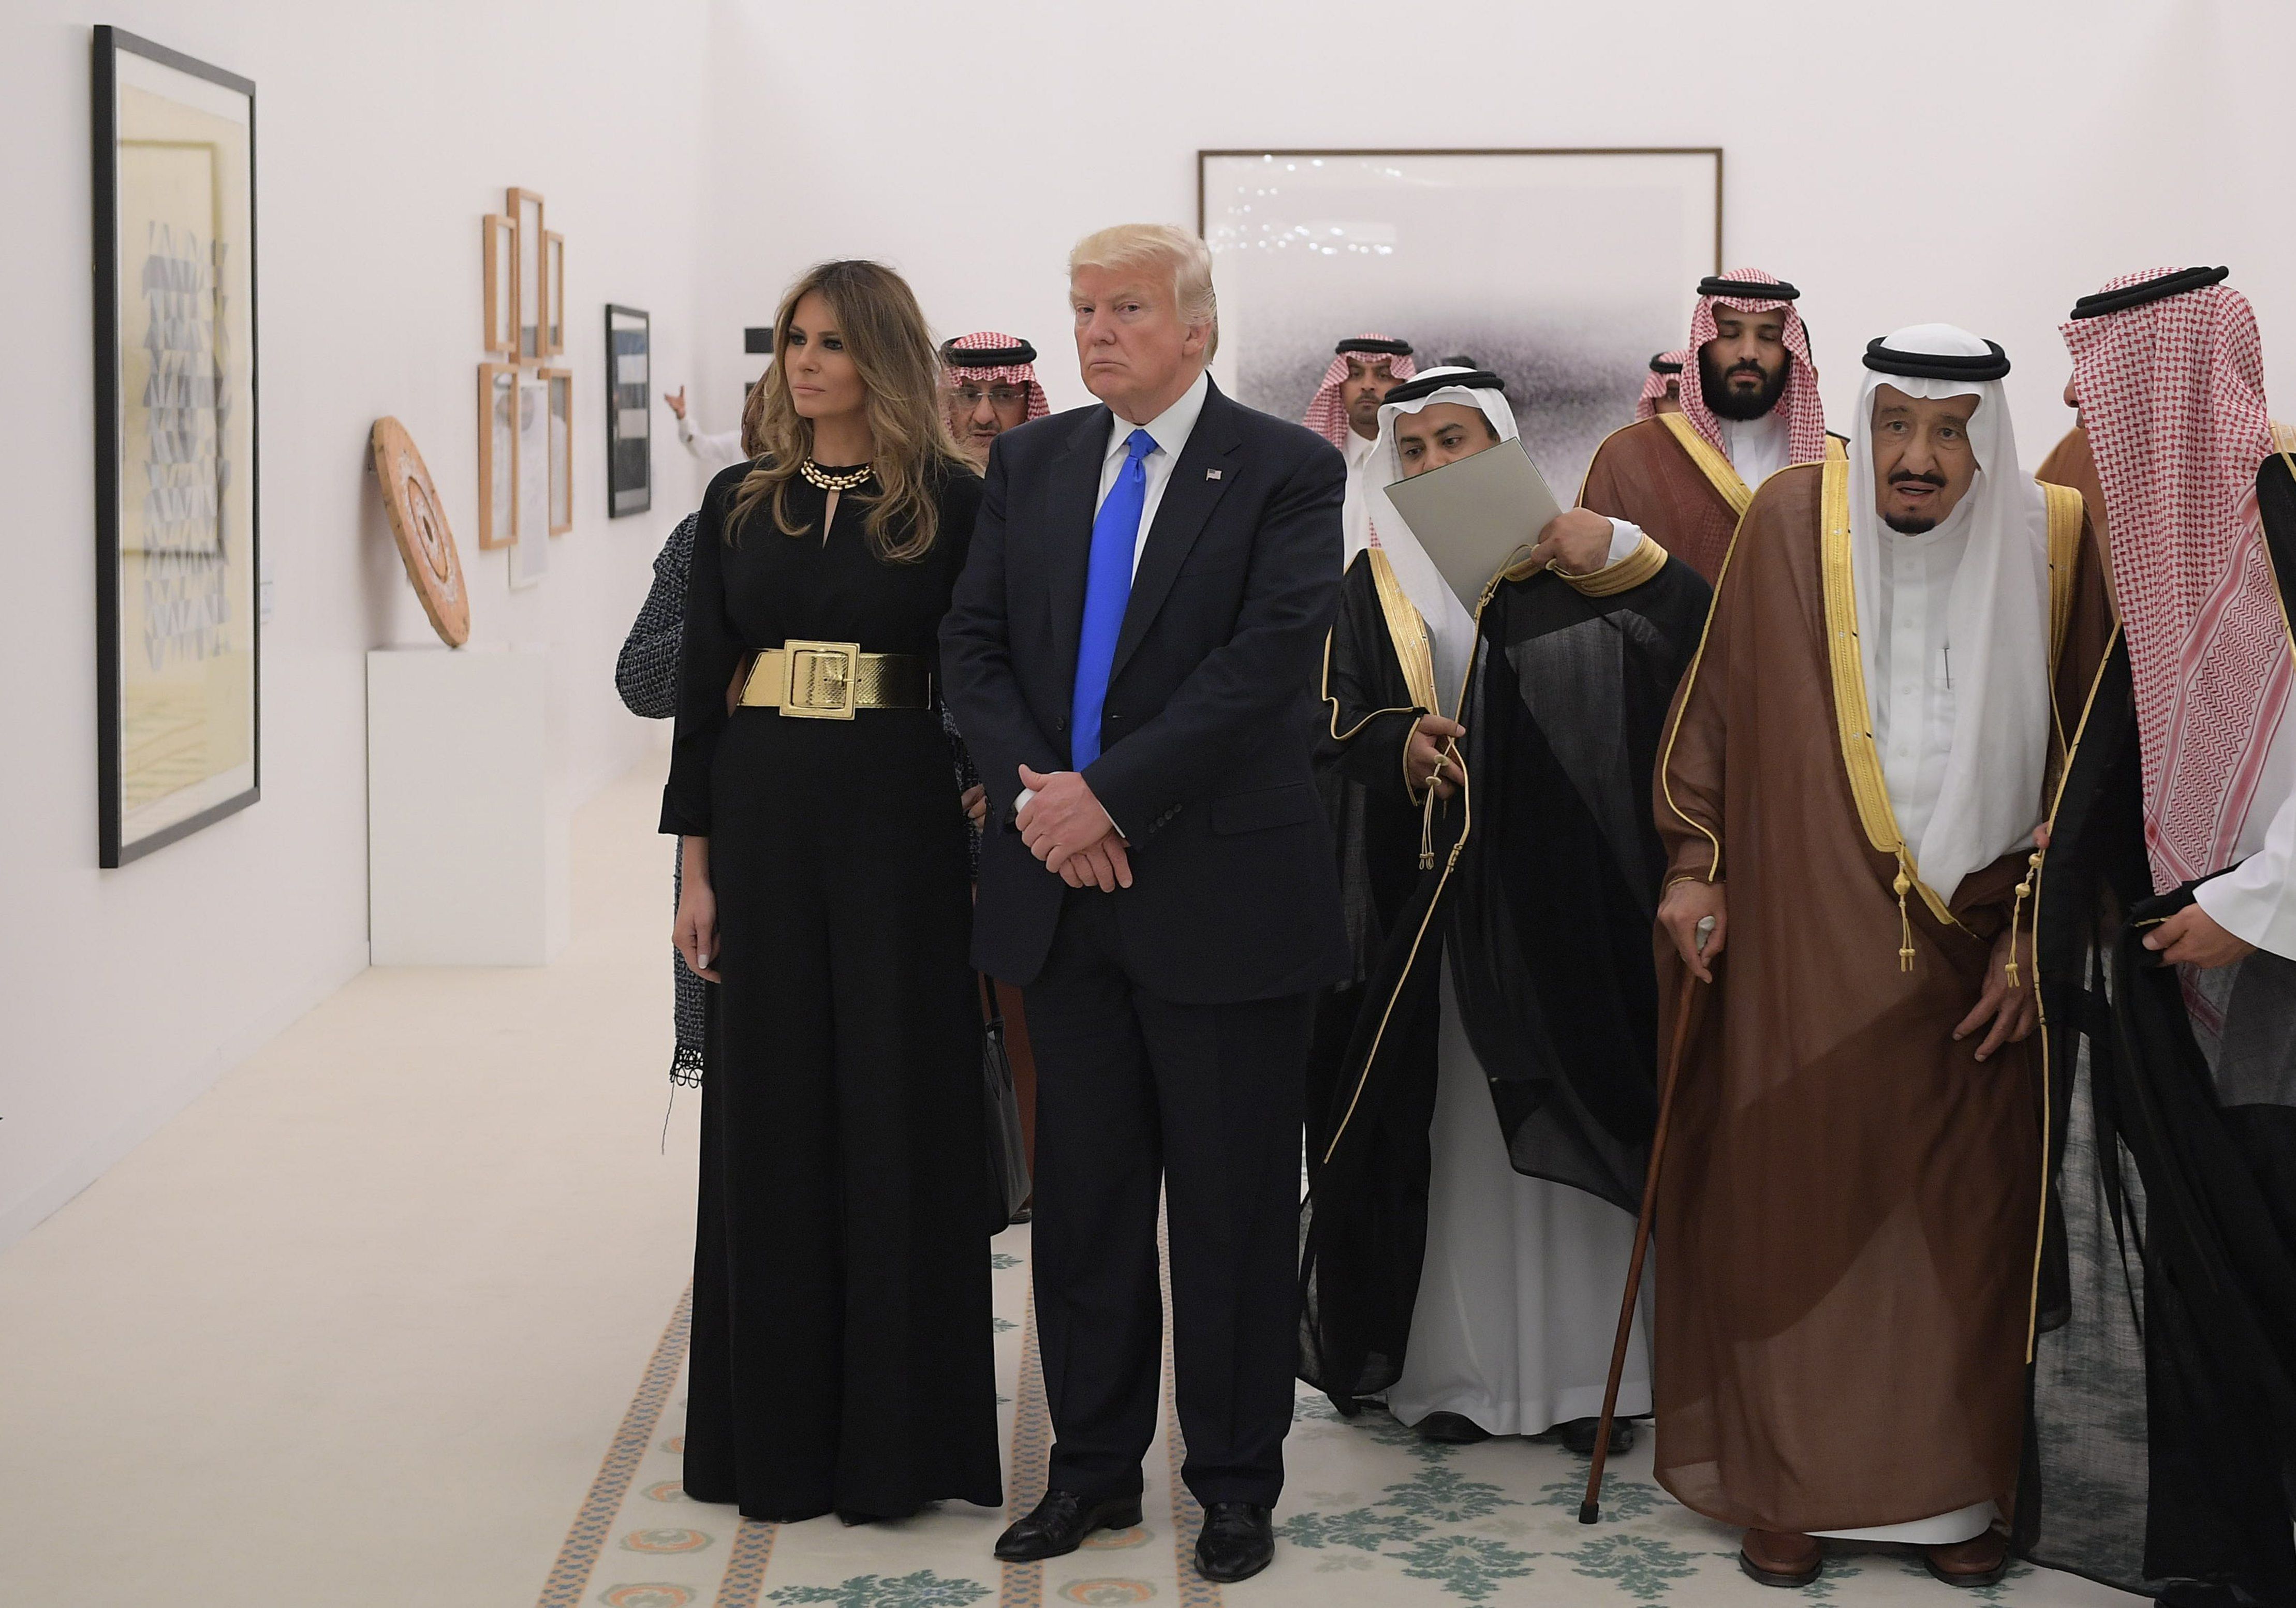 Photos Melania Trump In Saudi Arabia Without Headscarf